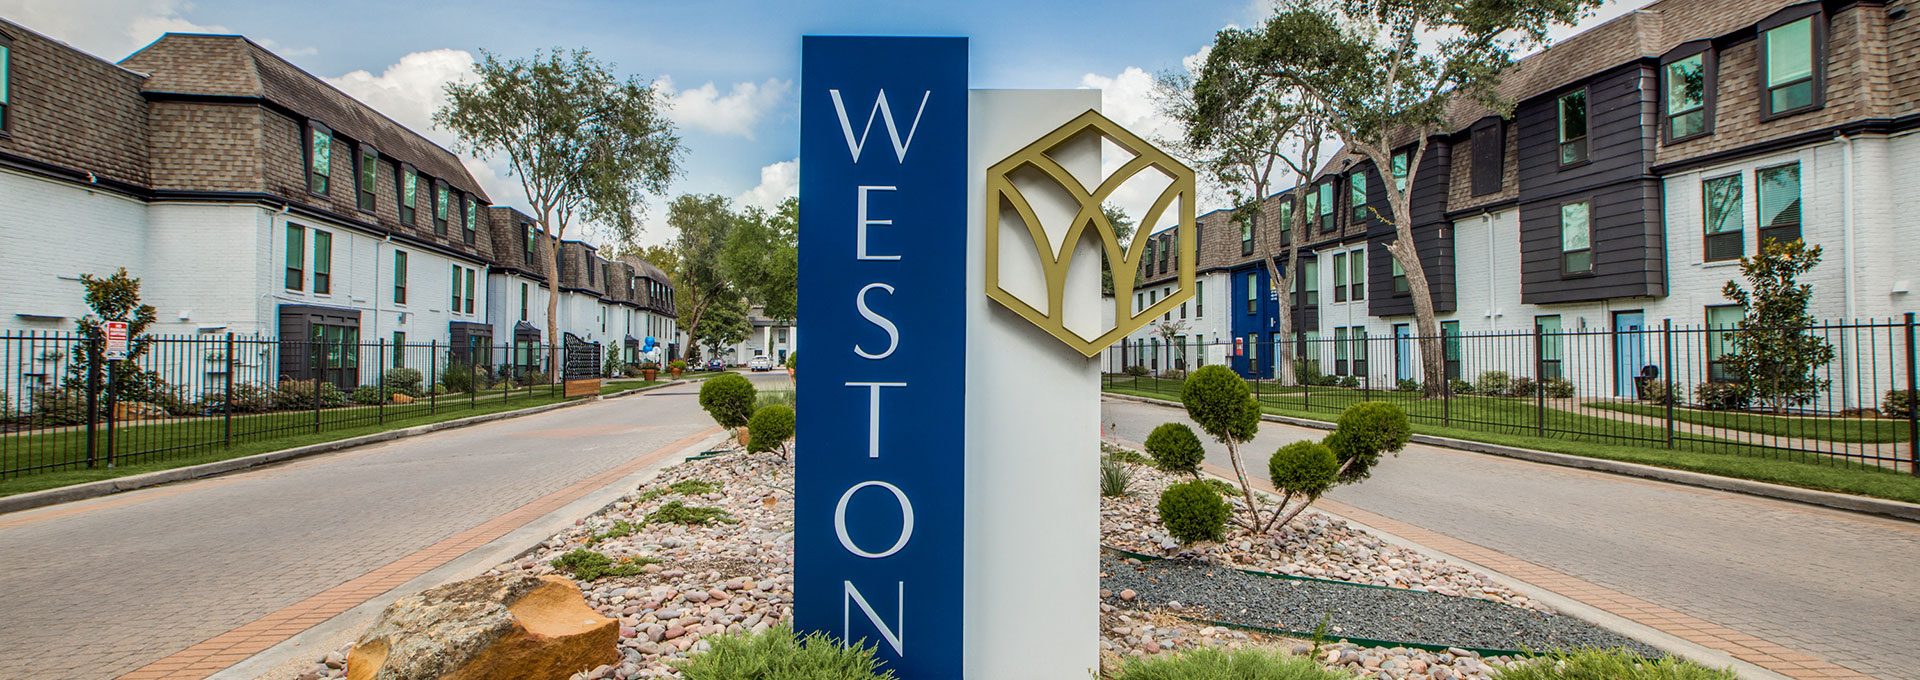 weston apartments in weston, tx at The WESTON